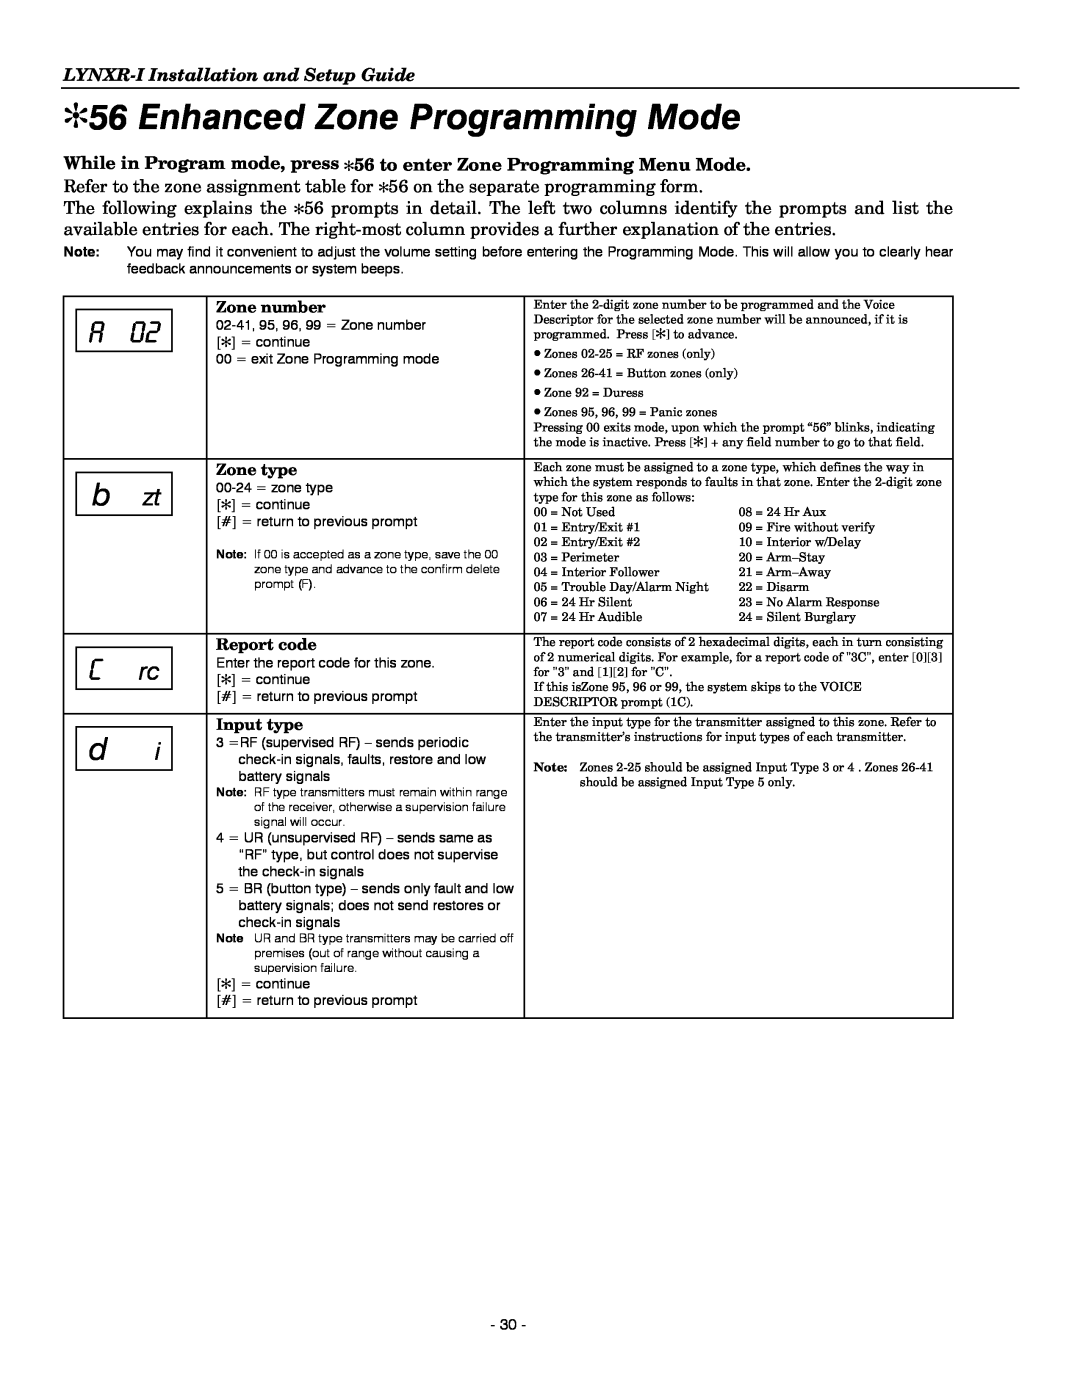 Honeywell K14114 3/06 Rev.B setup guide Enhanced Zone Programming Mode, LYNXR-IInstallation and Setup Guide 